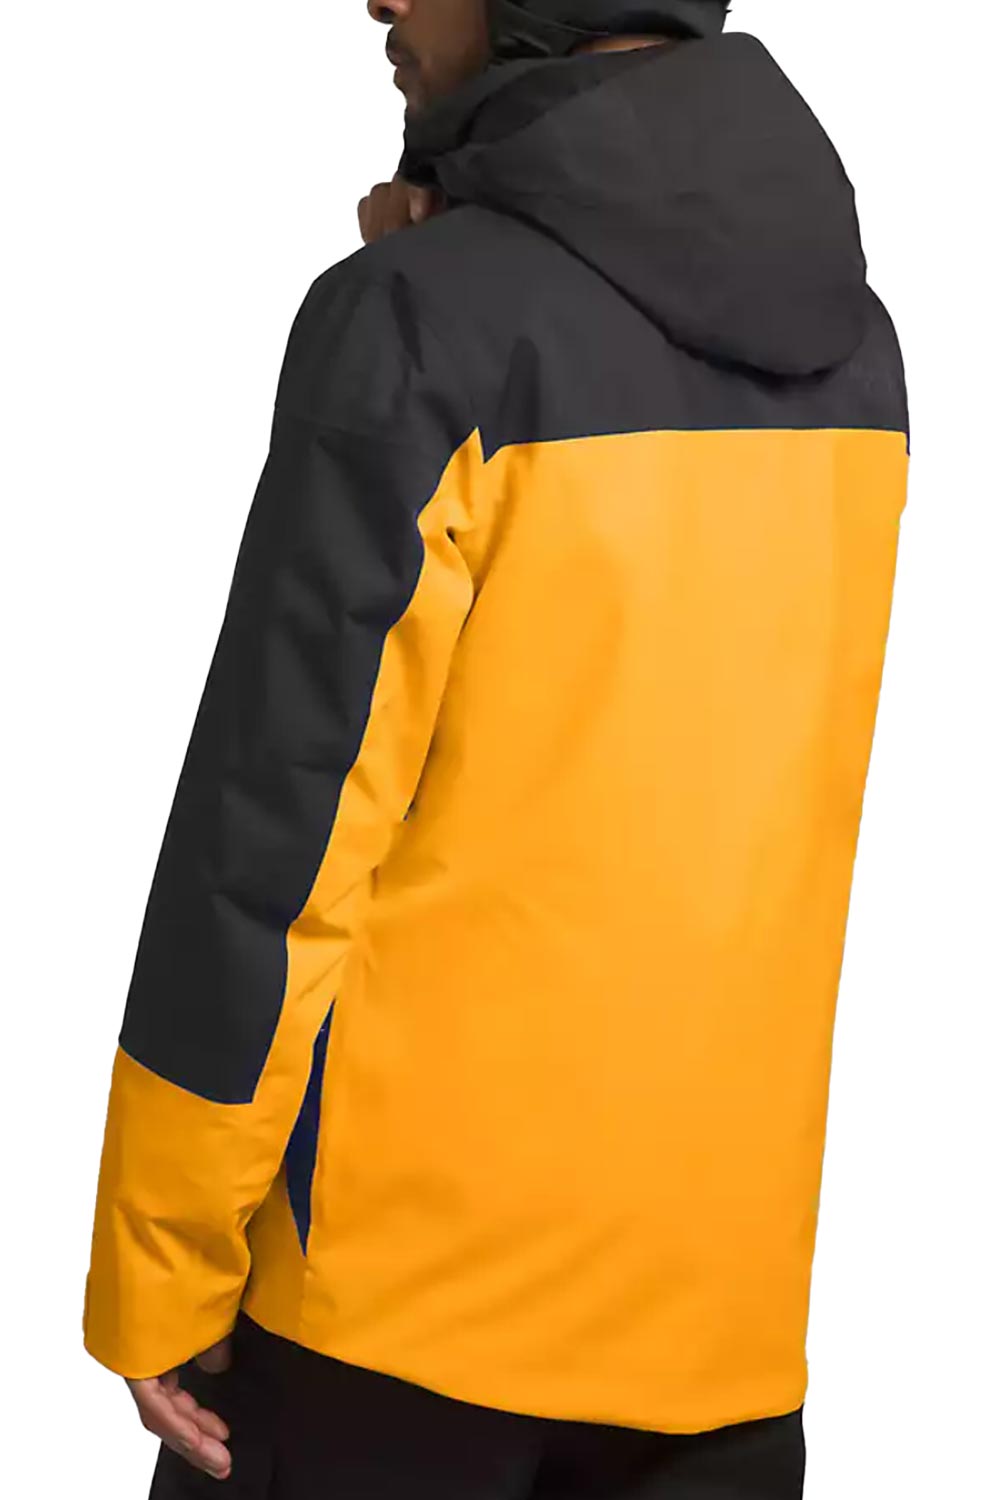 The North Face Chakal jacket, dark gray and yellow